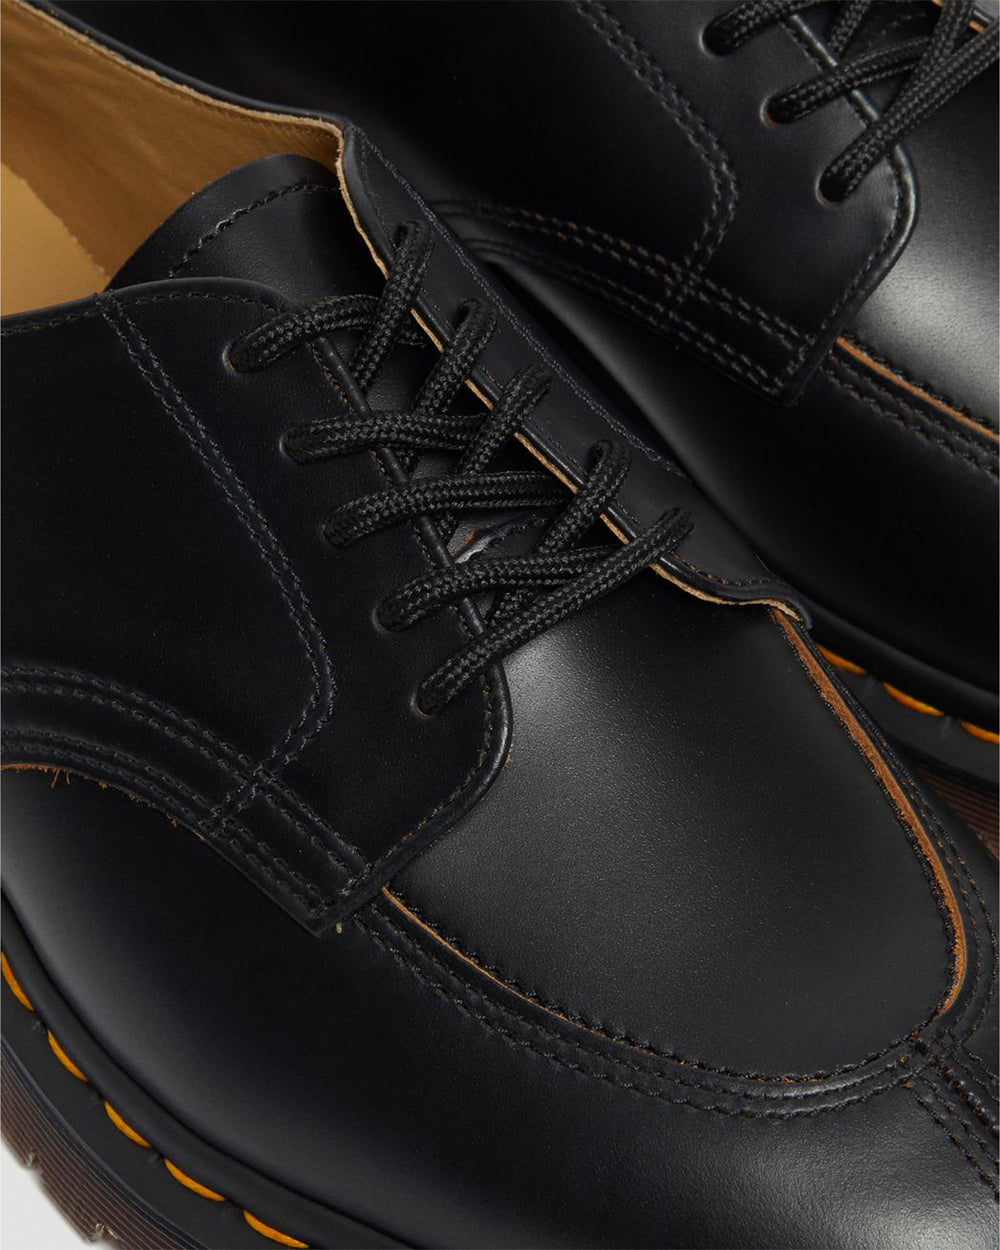 Dr Martens 2046 Vintage Smooth Leather Oxford Shoes | STASHED